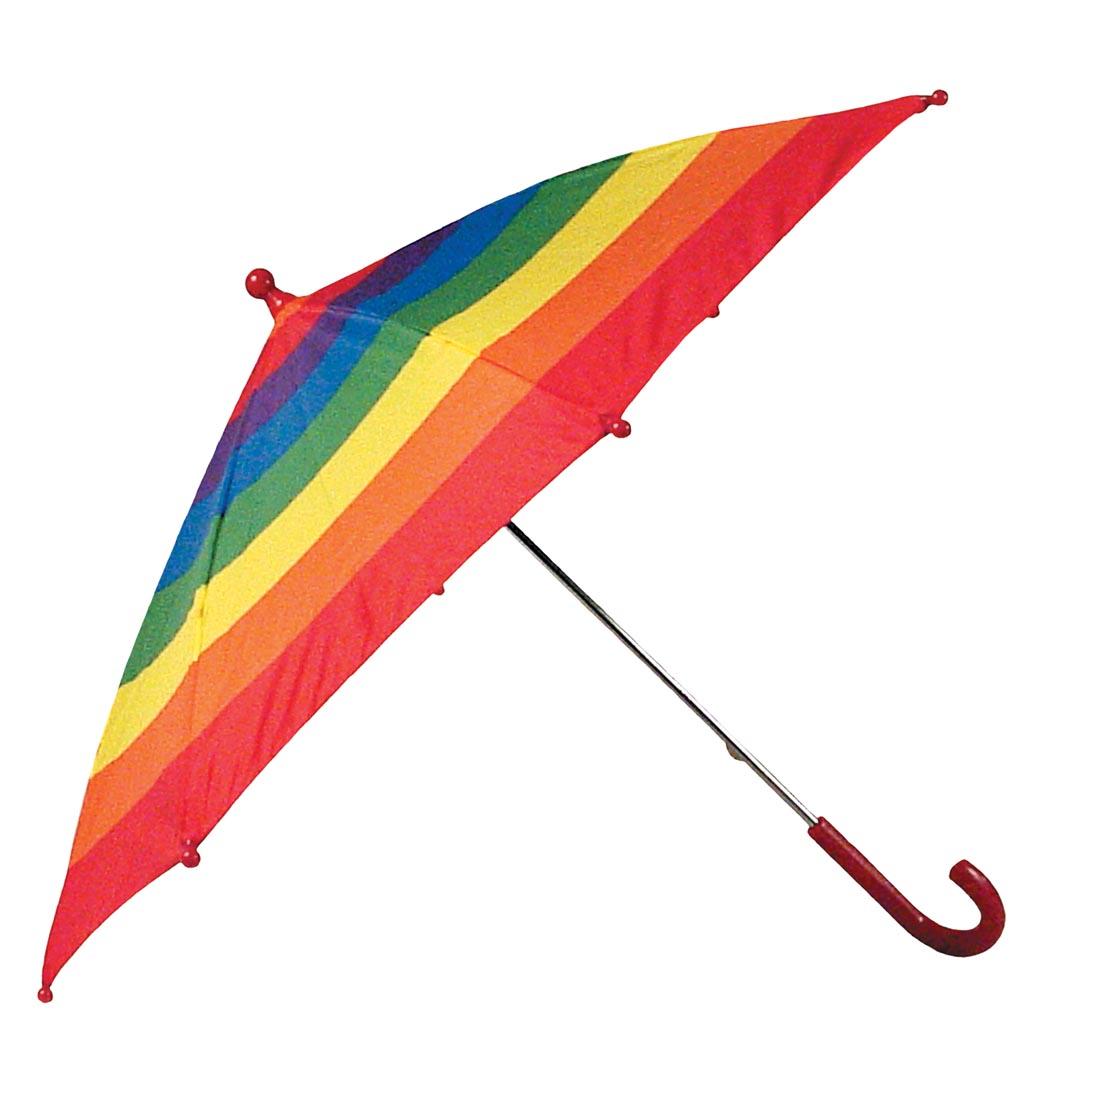 Rainbow Umbrella fully opened